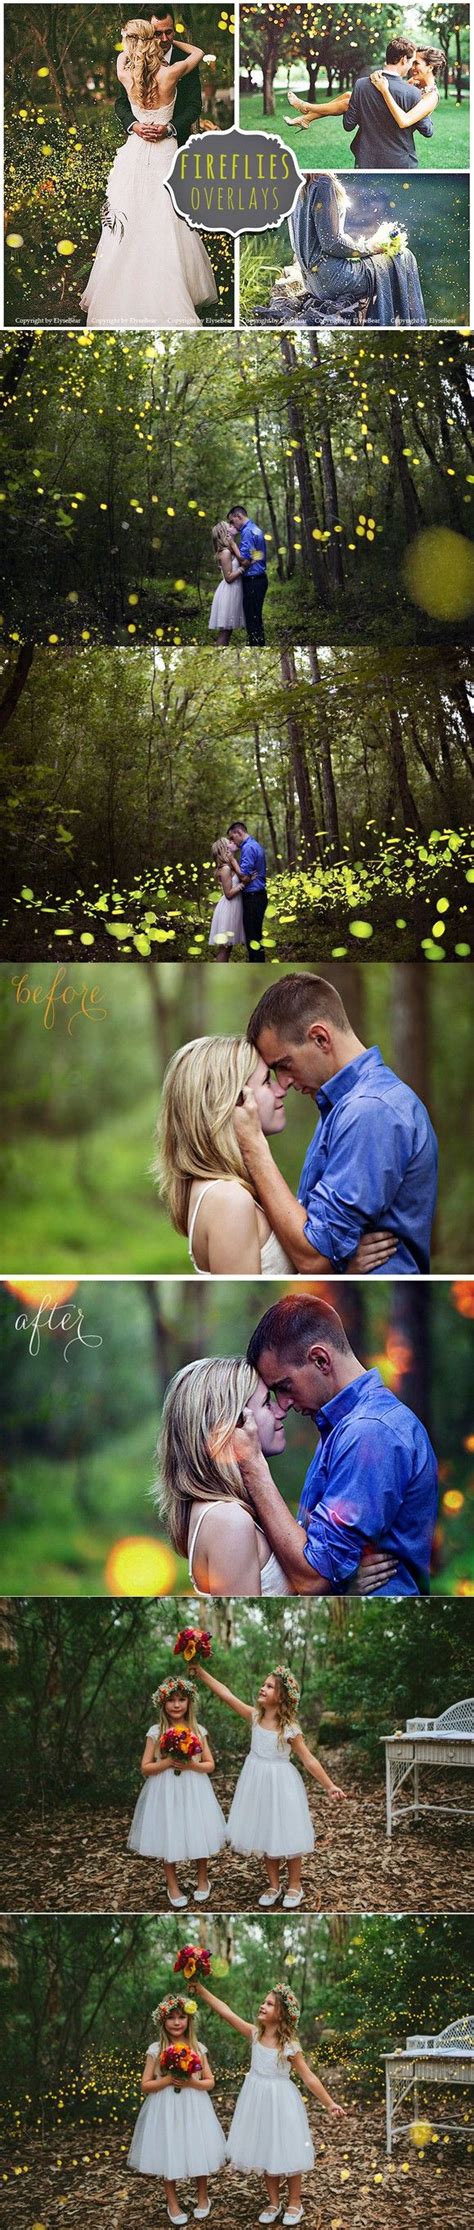 35 Fireflies Photo Overlays. Photoshop Layer Styles. $9.00 | Photo overlays, Photoshop overlays ...